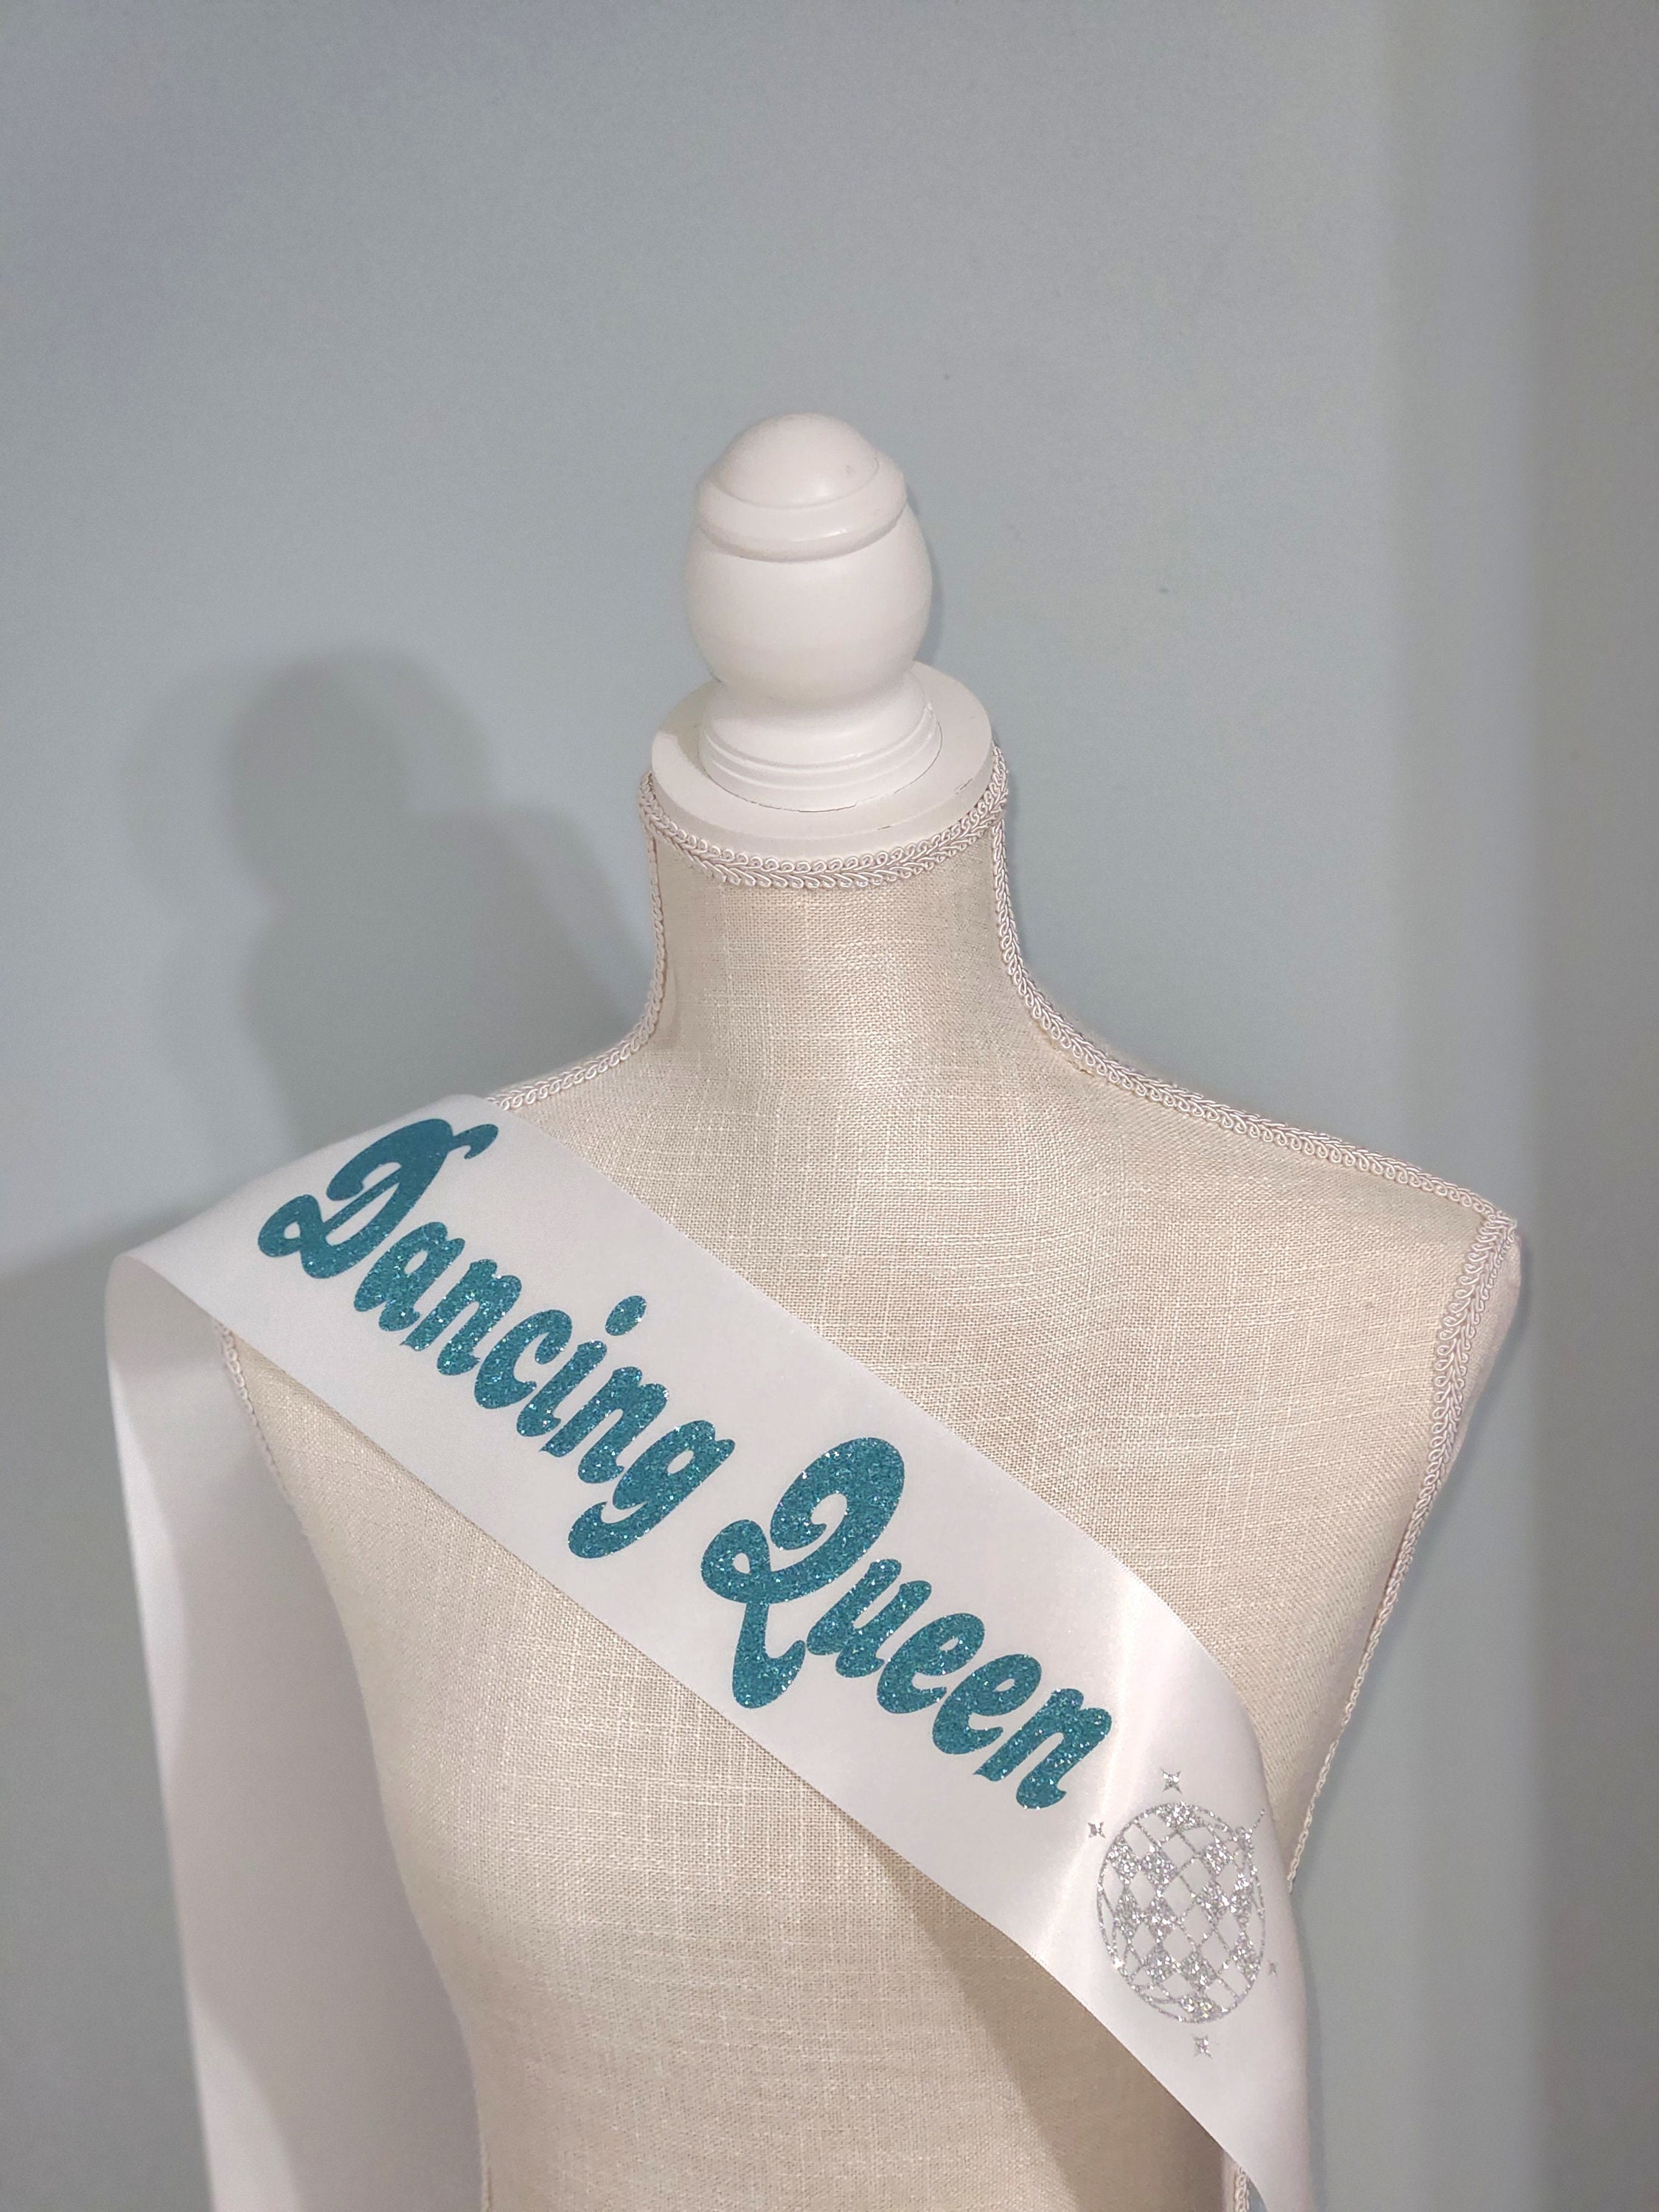 Pop Star Abba Costume - Dallas Vintage Clothing & Costume Shop